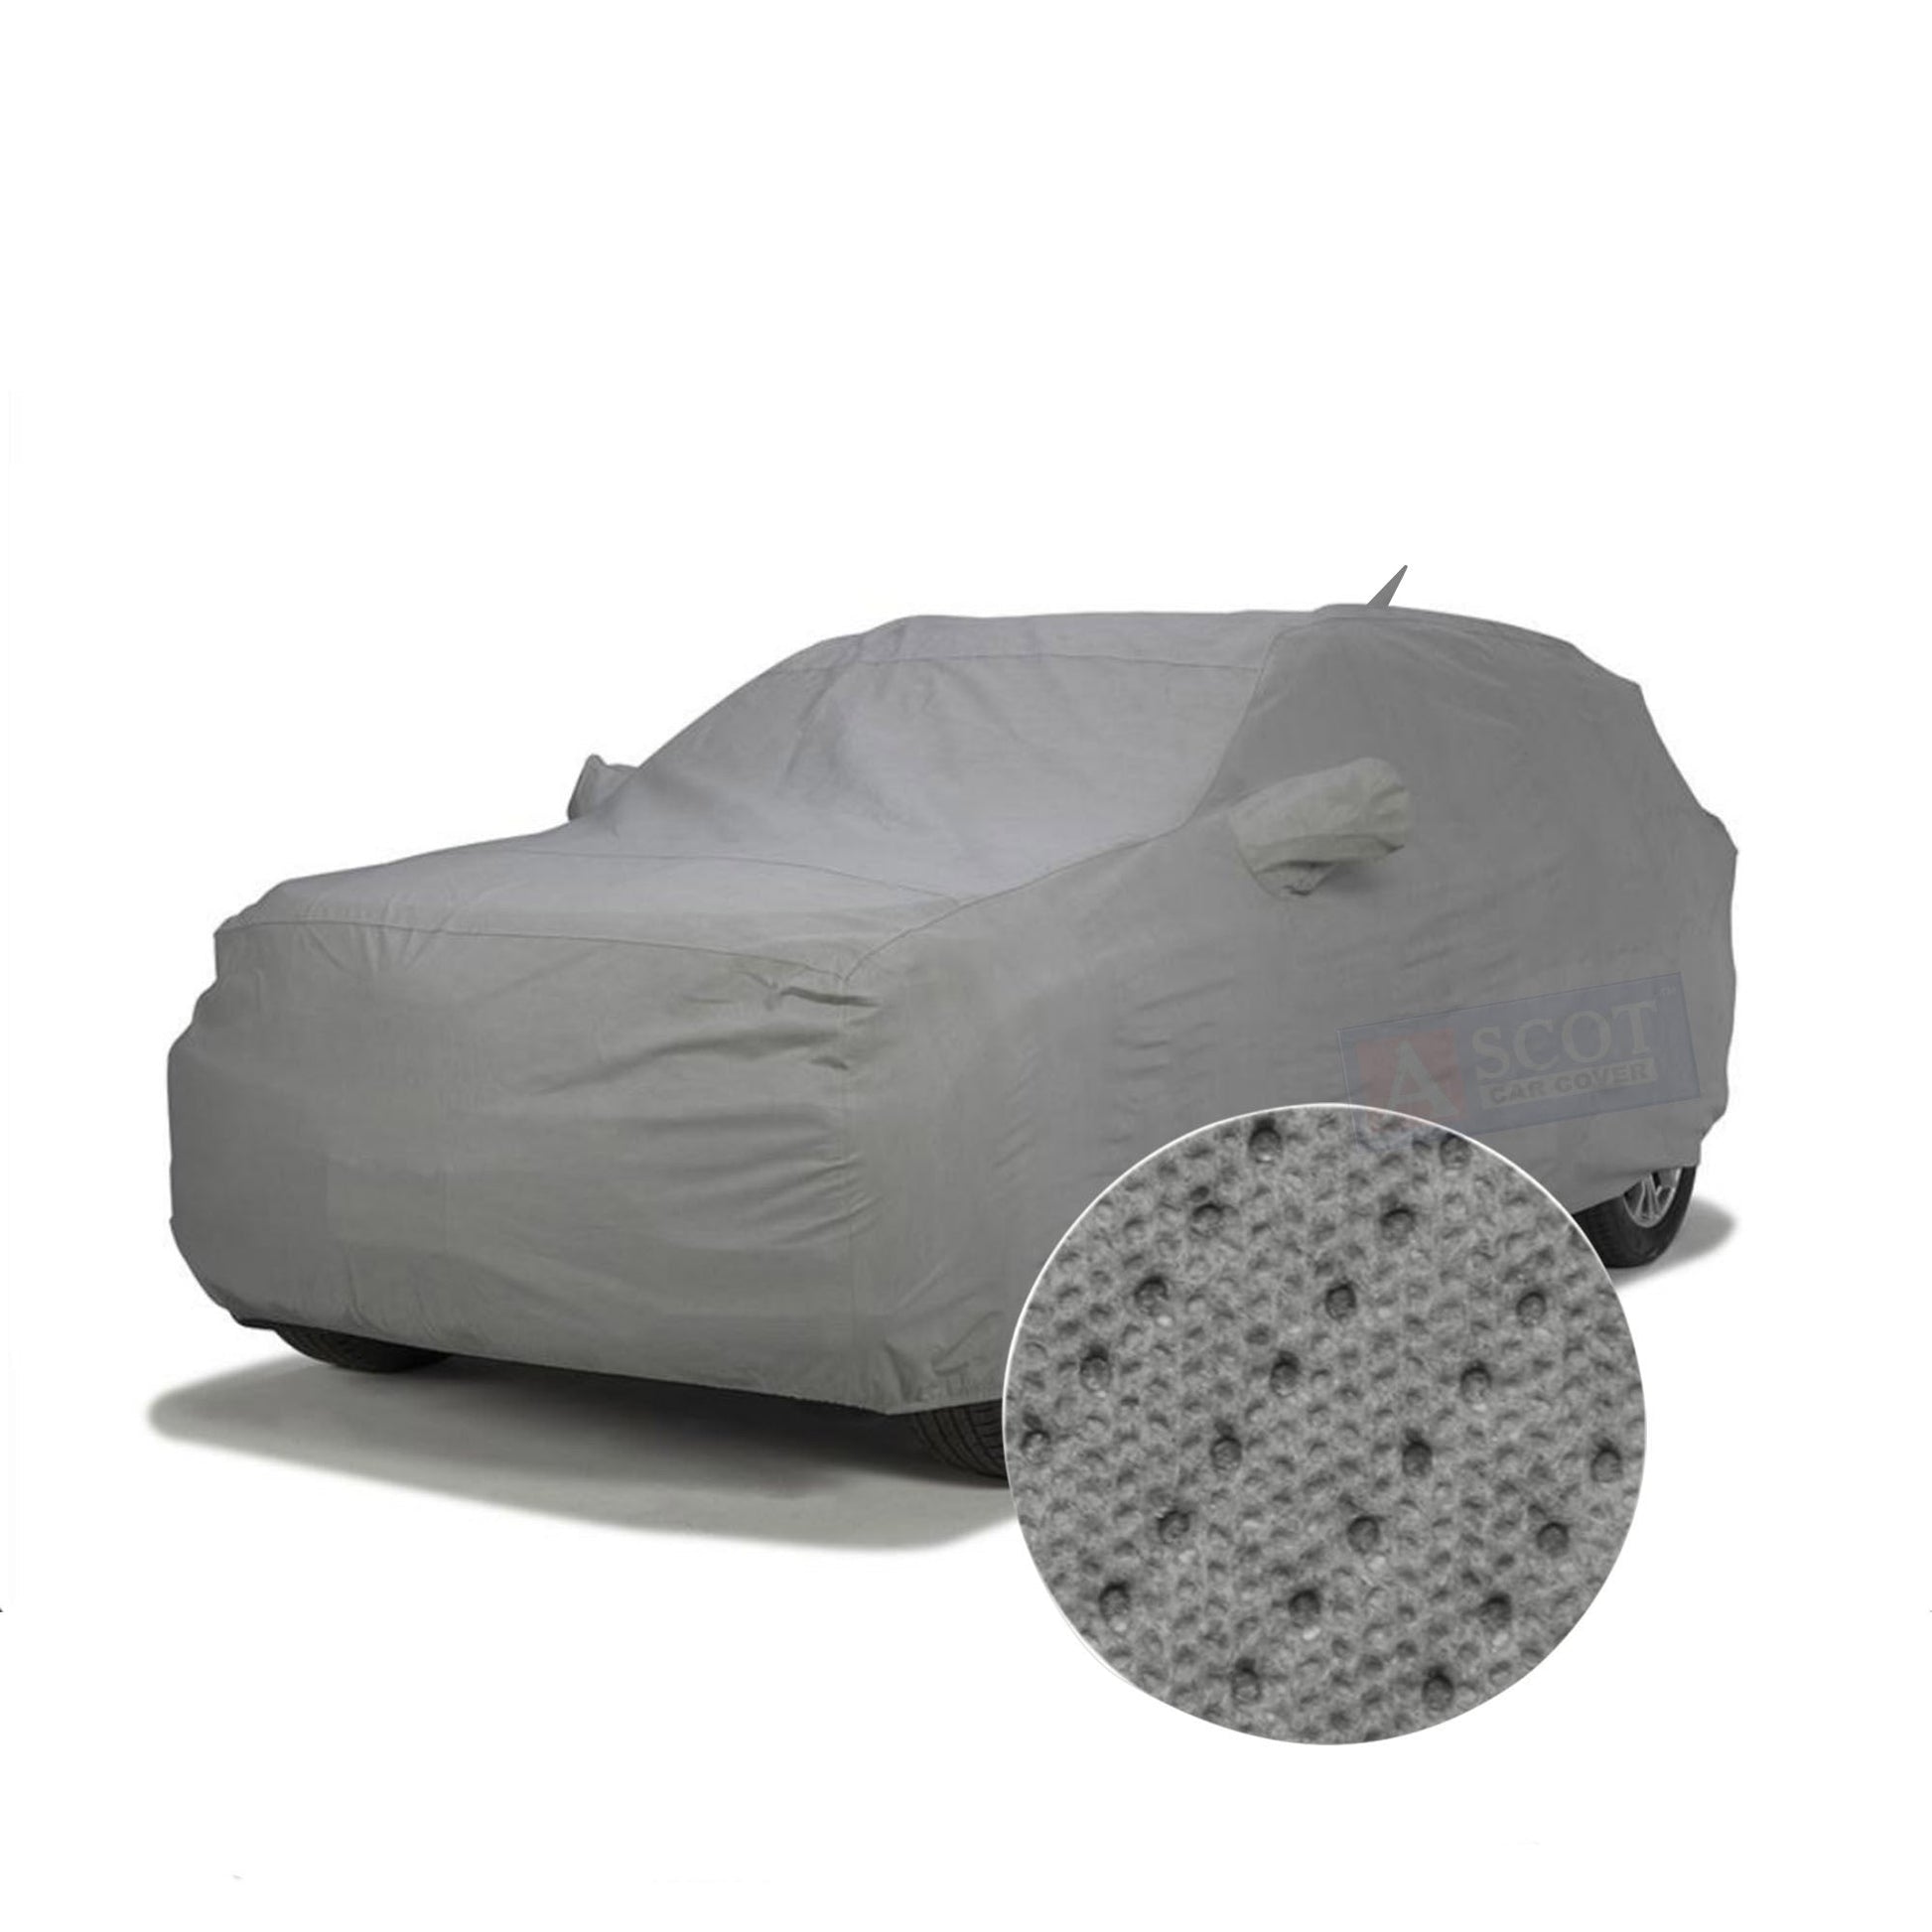 Car Cover Fits 2020 Audi TT TTS XCP XtremeCoverPro Waterproof Gold